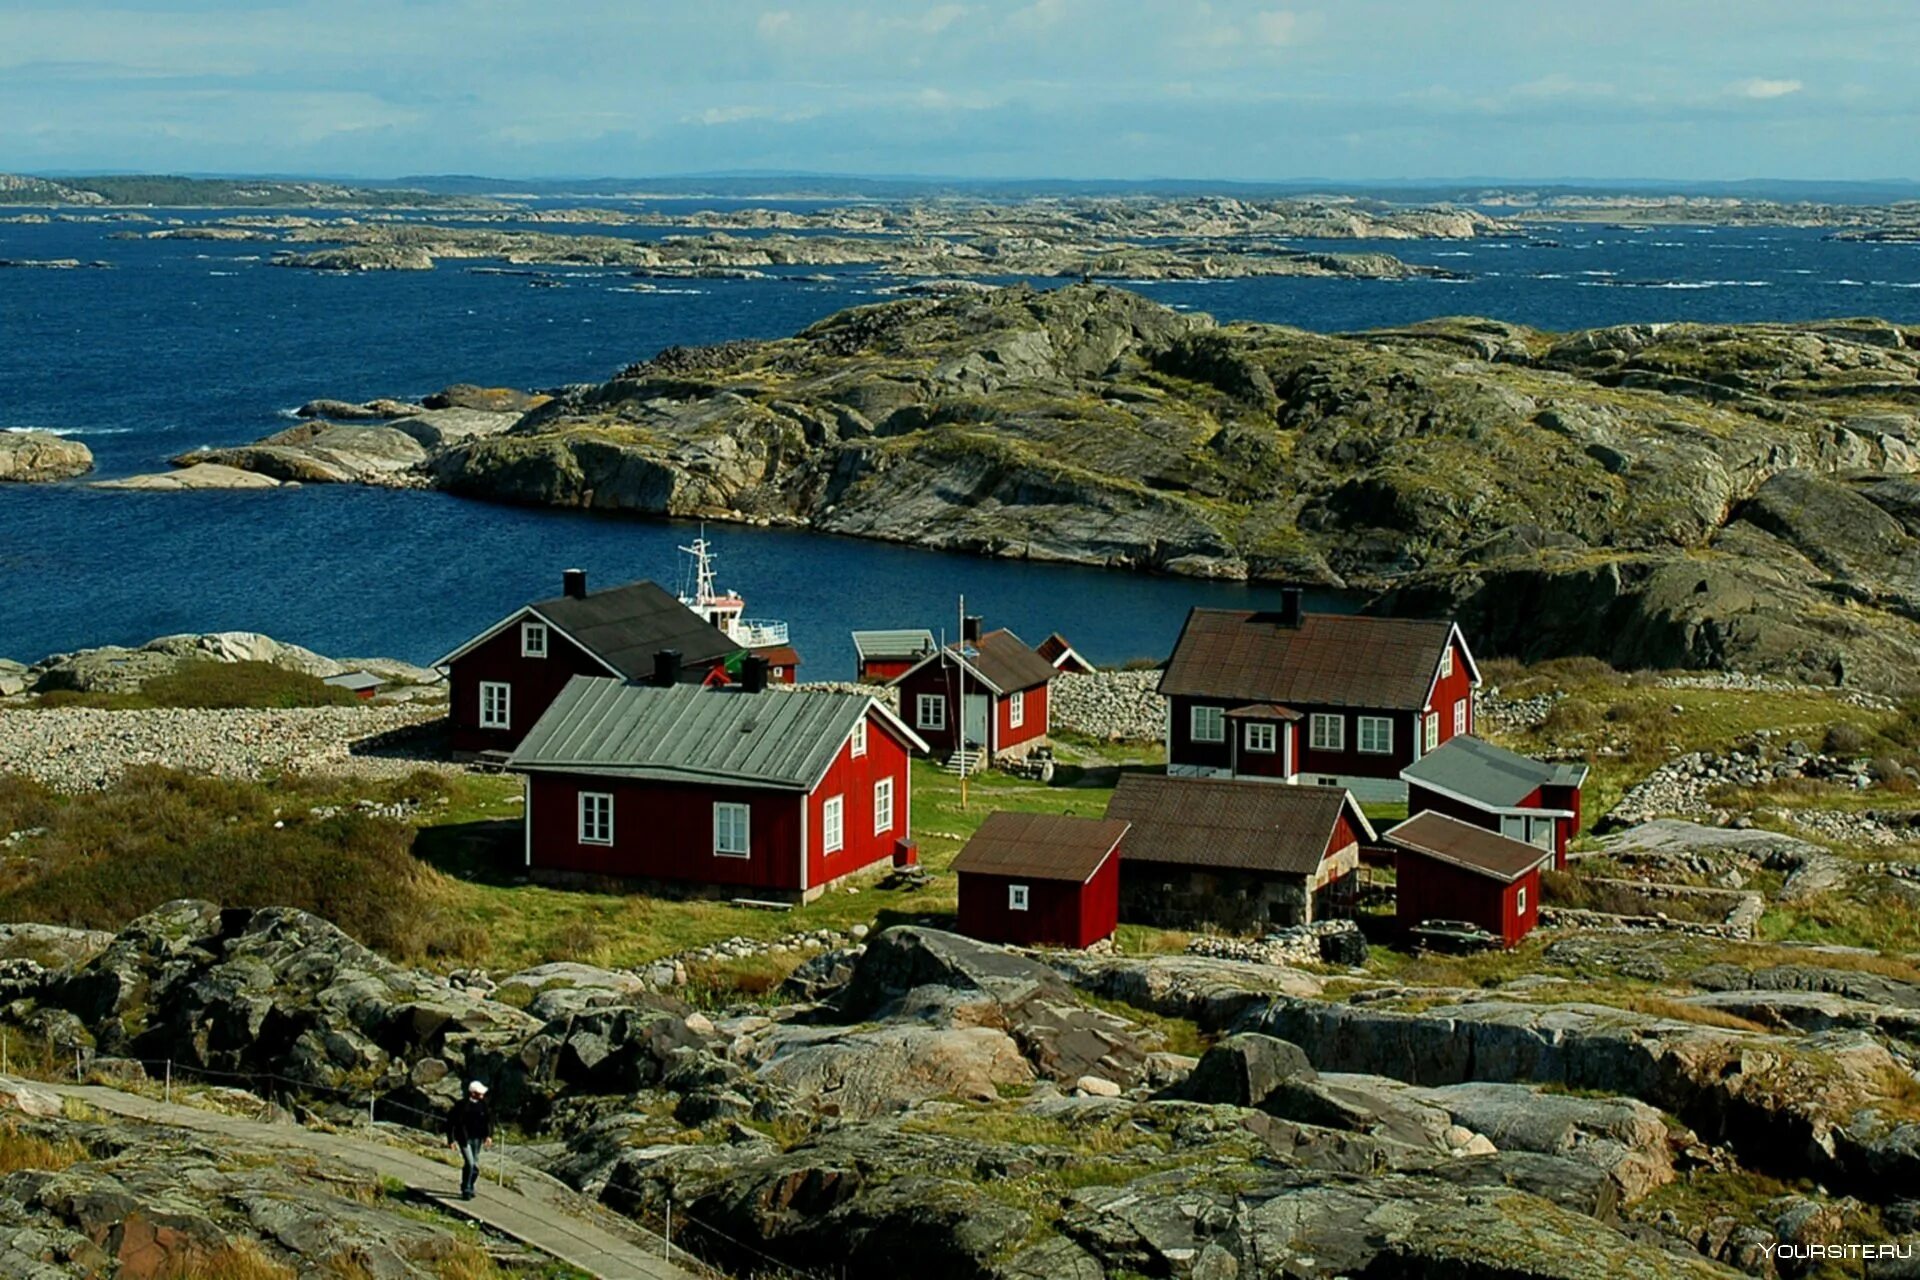 Остров Эланд Швеция. Остров Бохуслен Швеция. Гульхольмен Швеция остров. Остров Эланд Швеция фото.